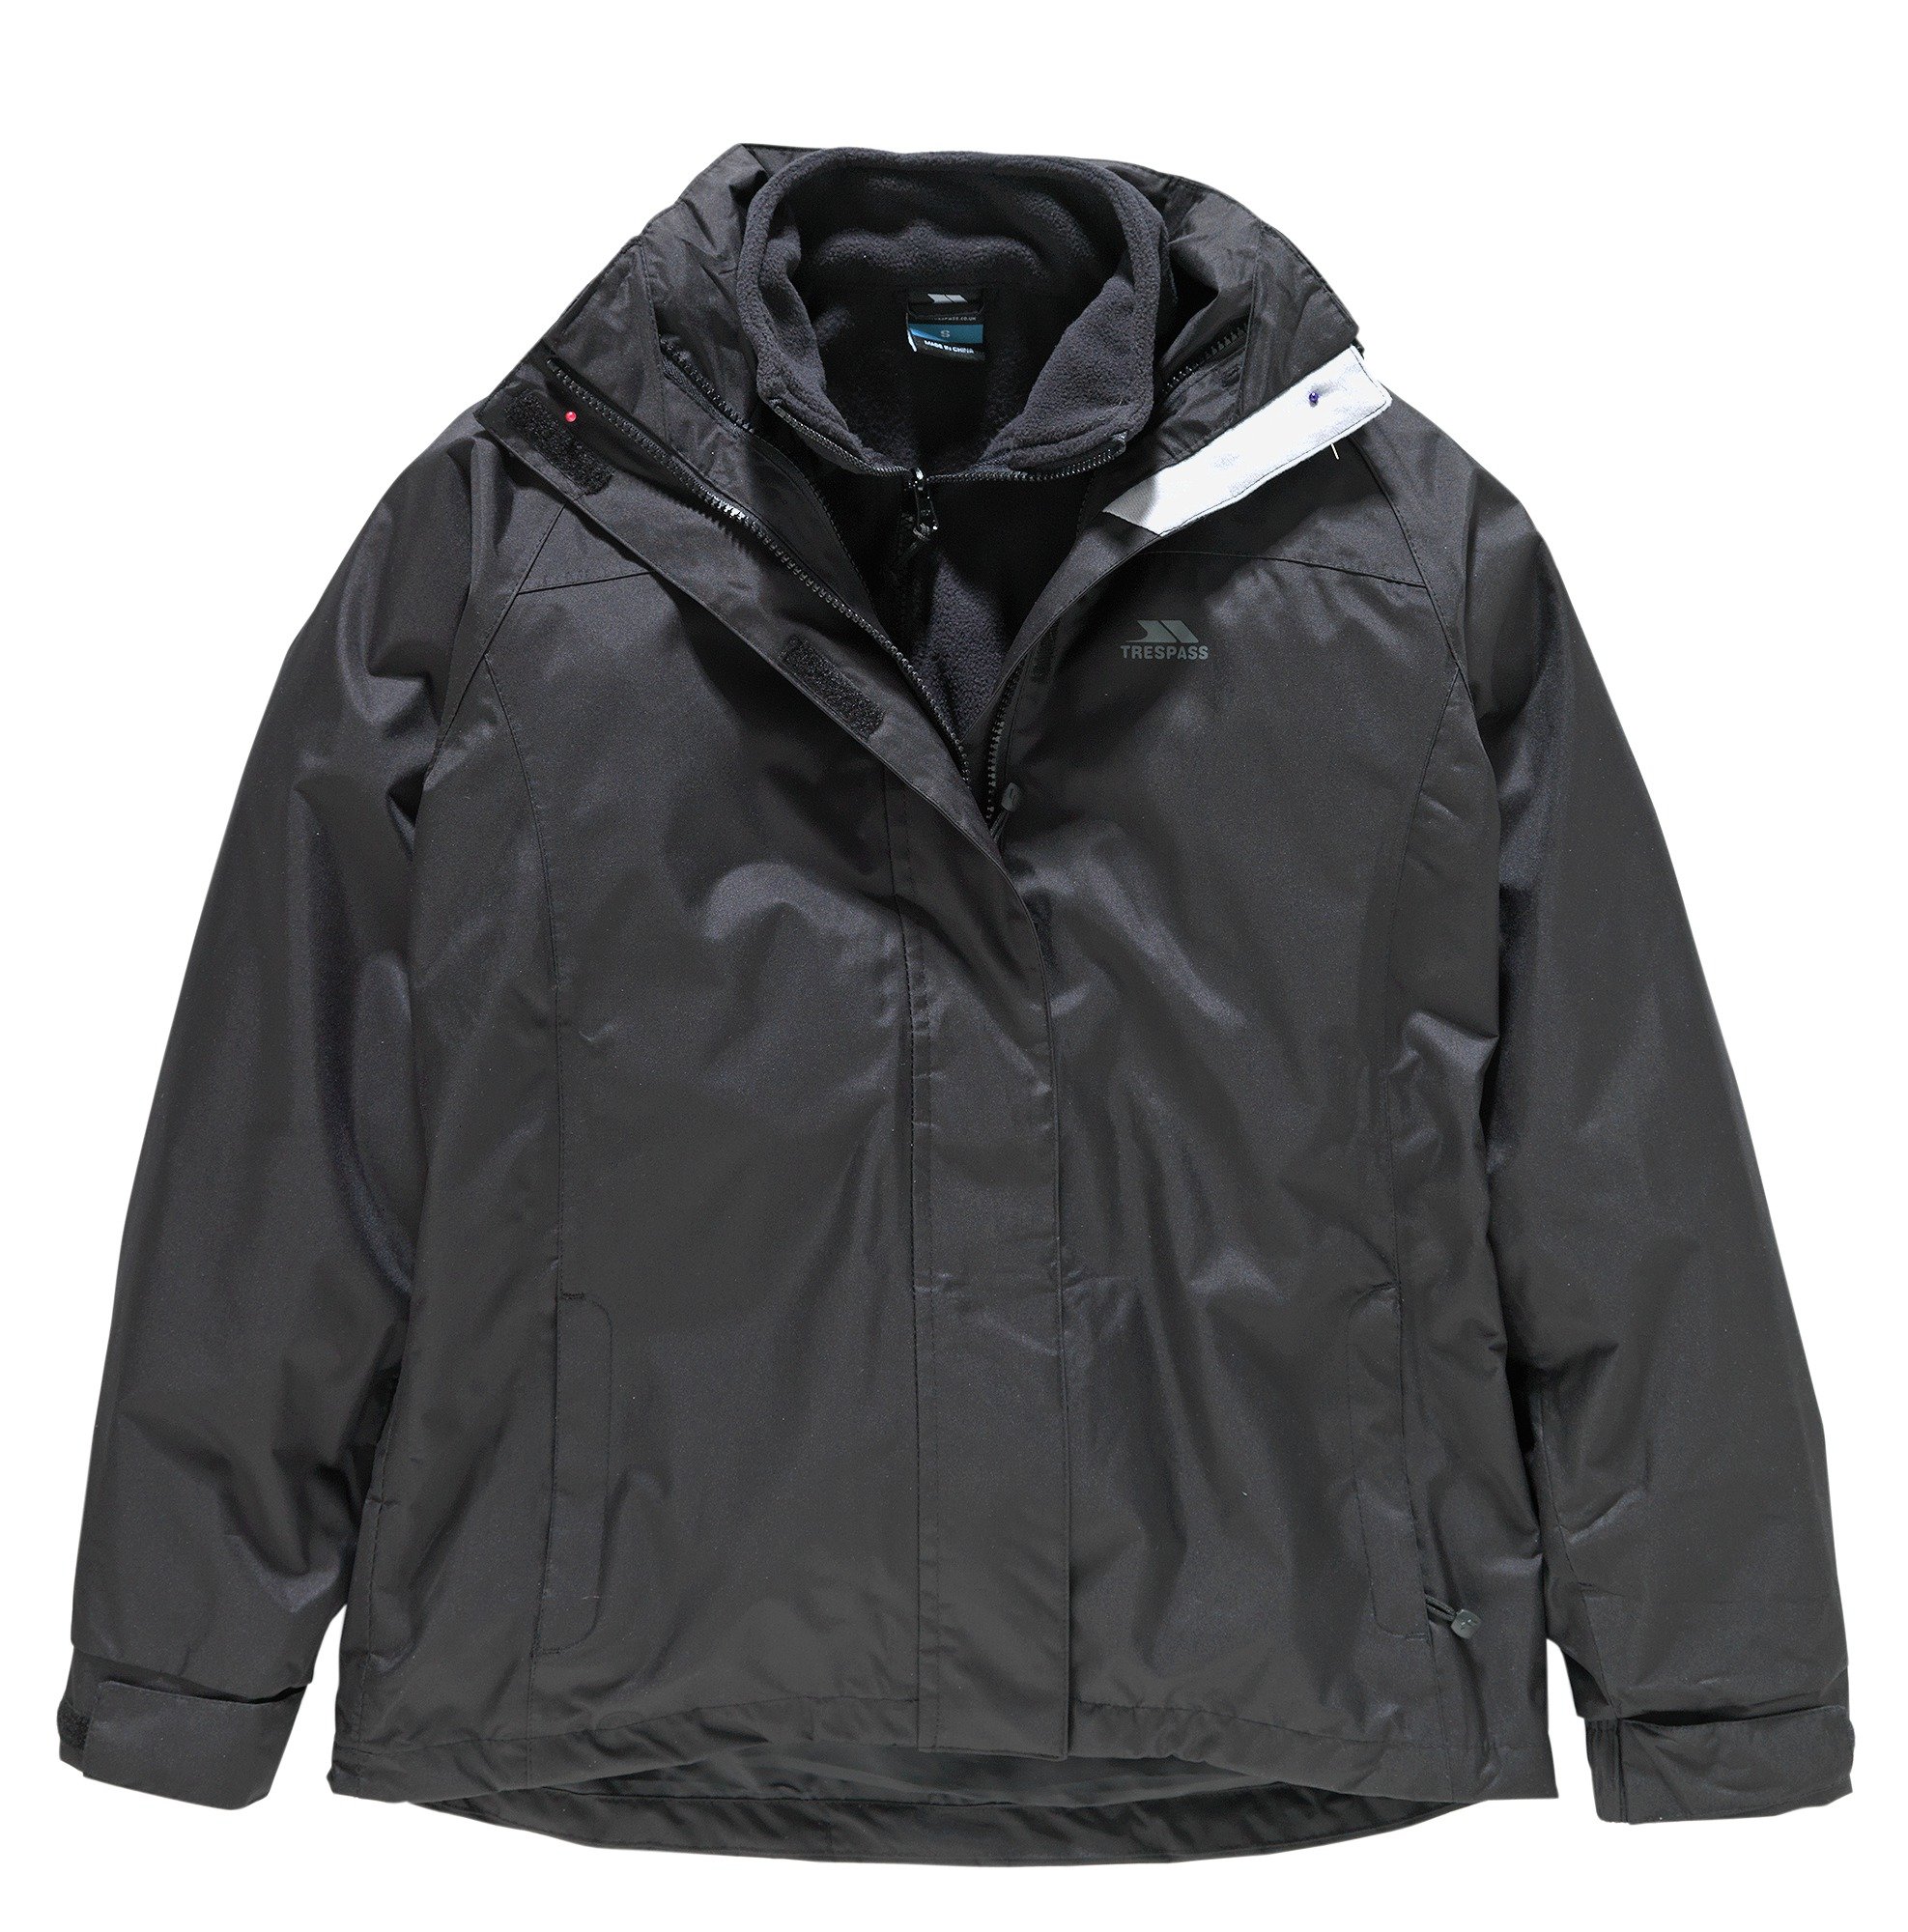 Trespass Black 3-in-1 Jacket & Fleece - Small